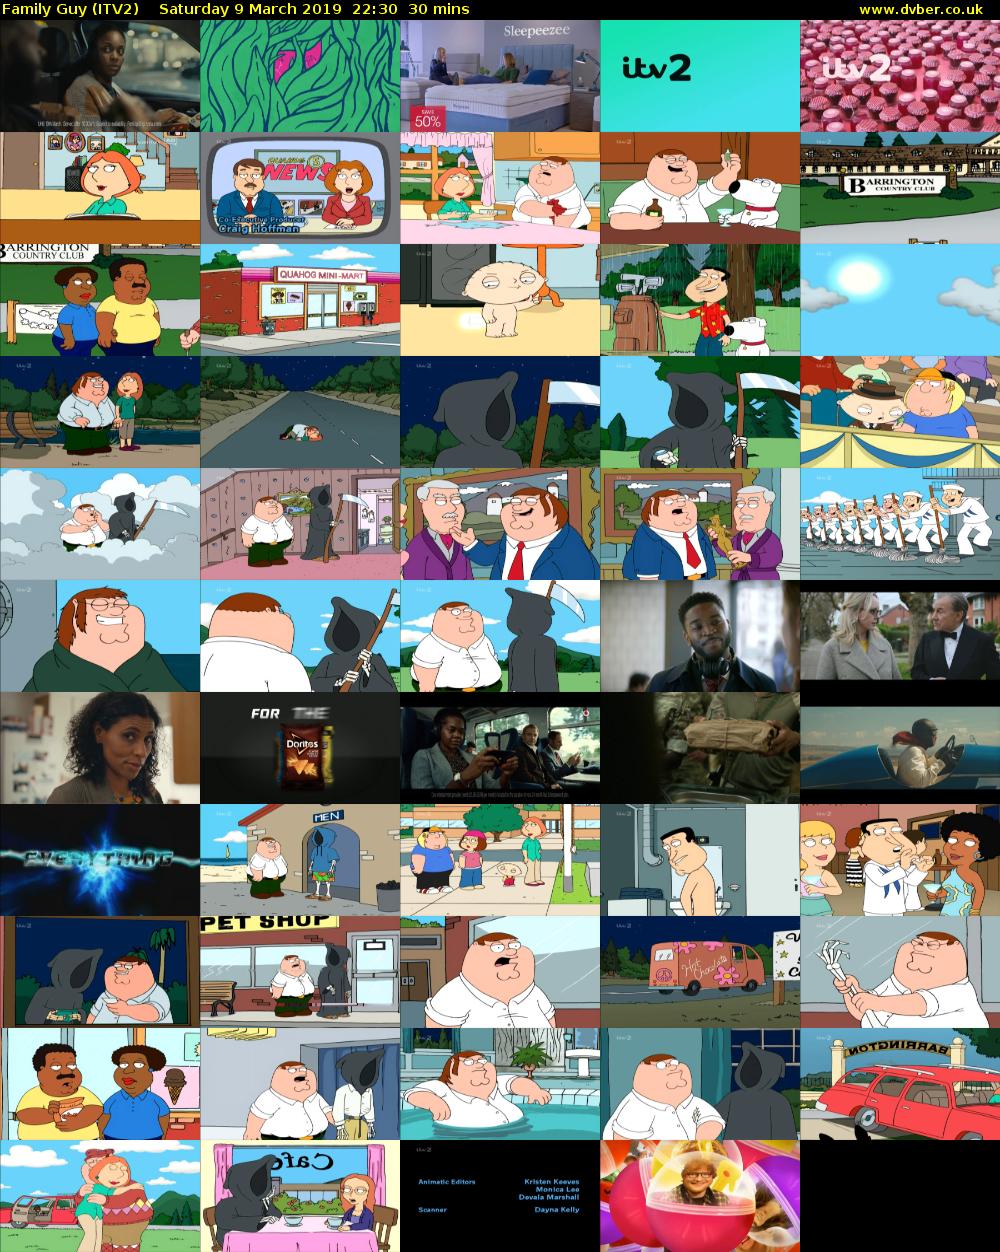 Family Guy (ITV2) Saturday 9 March 2019 22:30 - 23:00